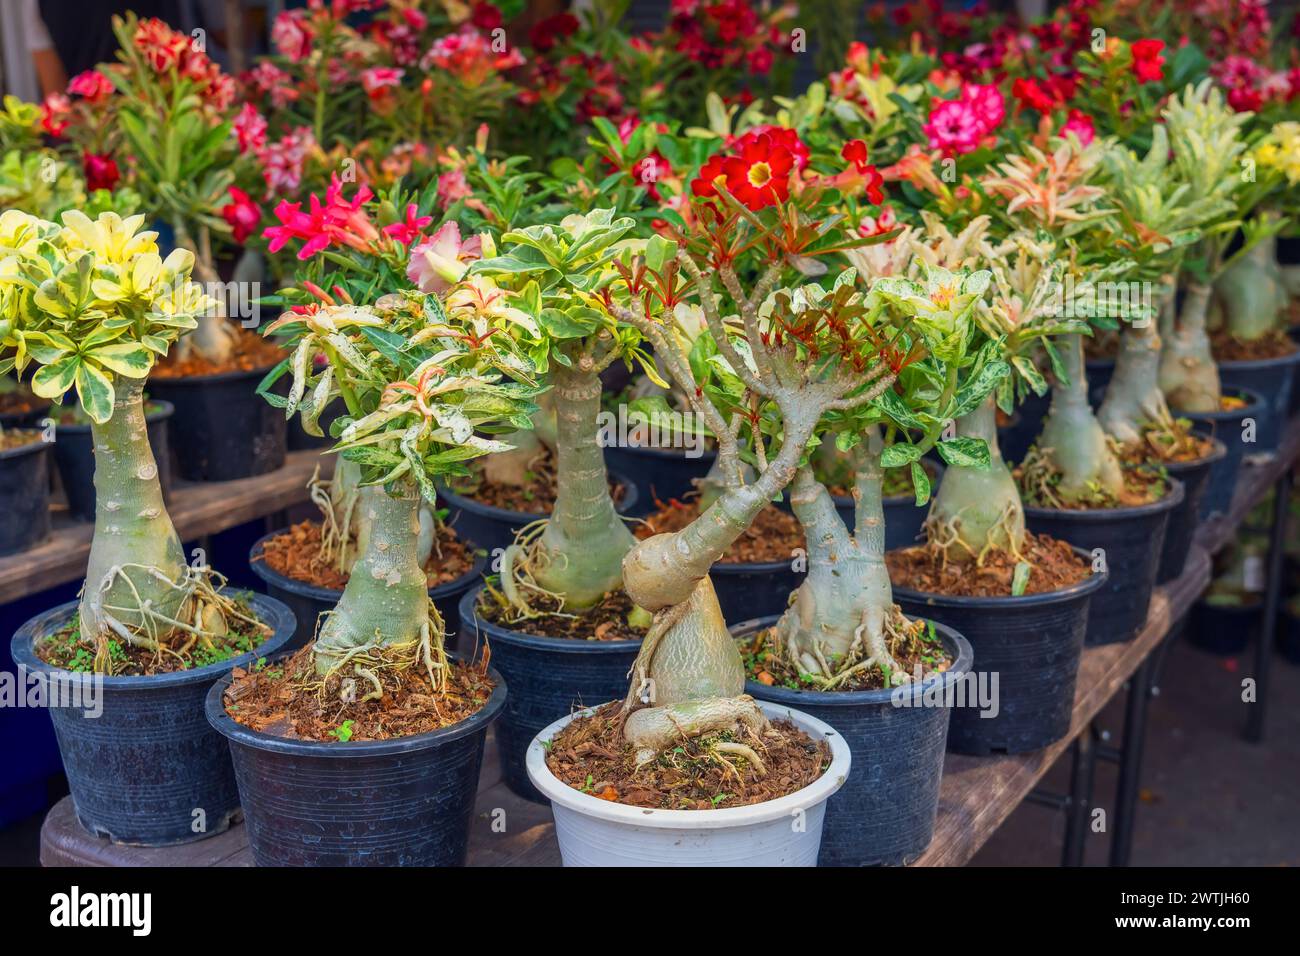 Variegated variegated adenium of various flowering colors in pots on display in the garden Stock Photo